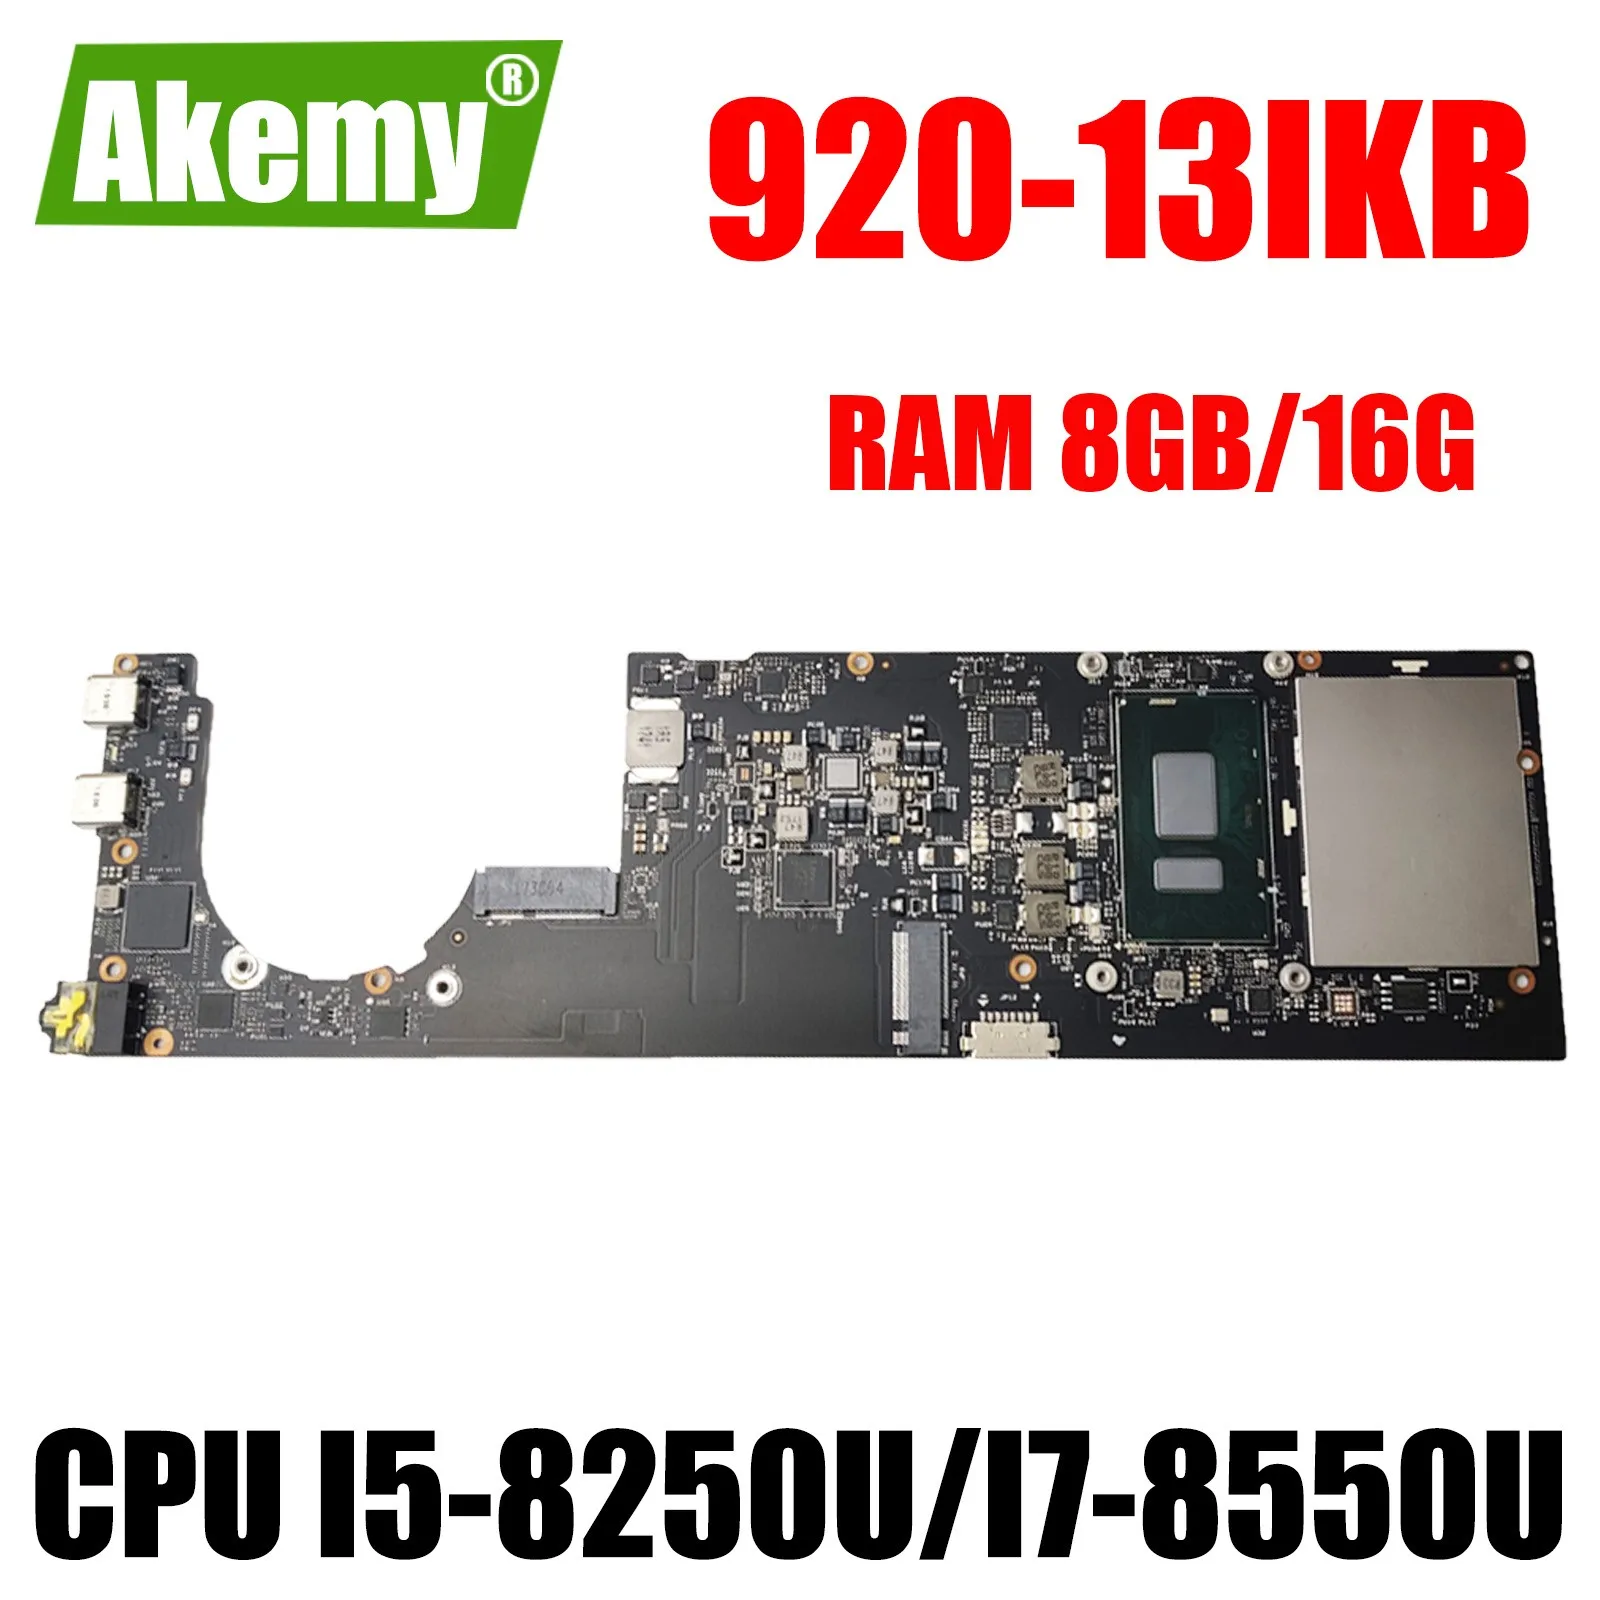 

For Lenovo Yoga 920-13IKB Notebook Computer Motherboard.NM-B291 Motherboard.CPU I5-8250U/I7-8550U RAM 8GB/16G 100% test work